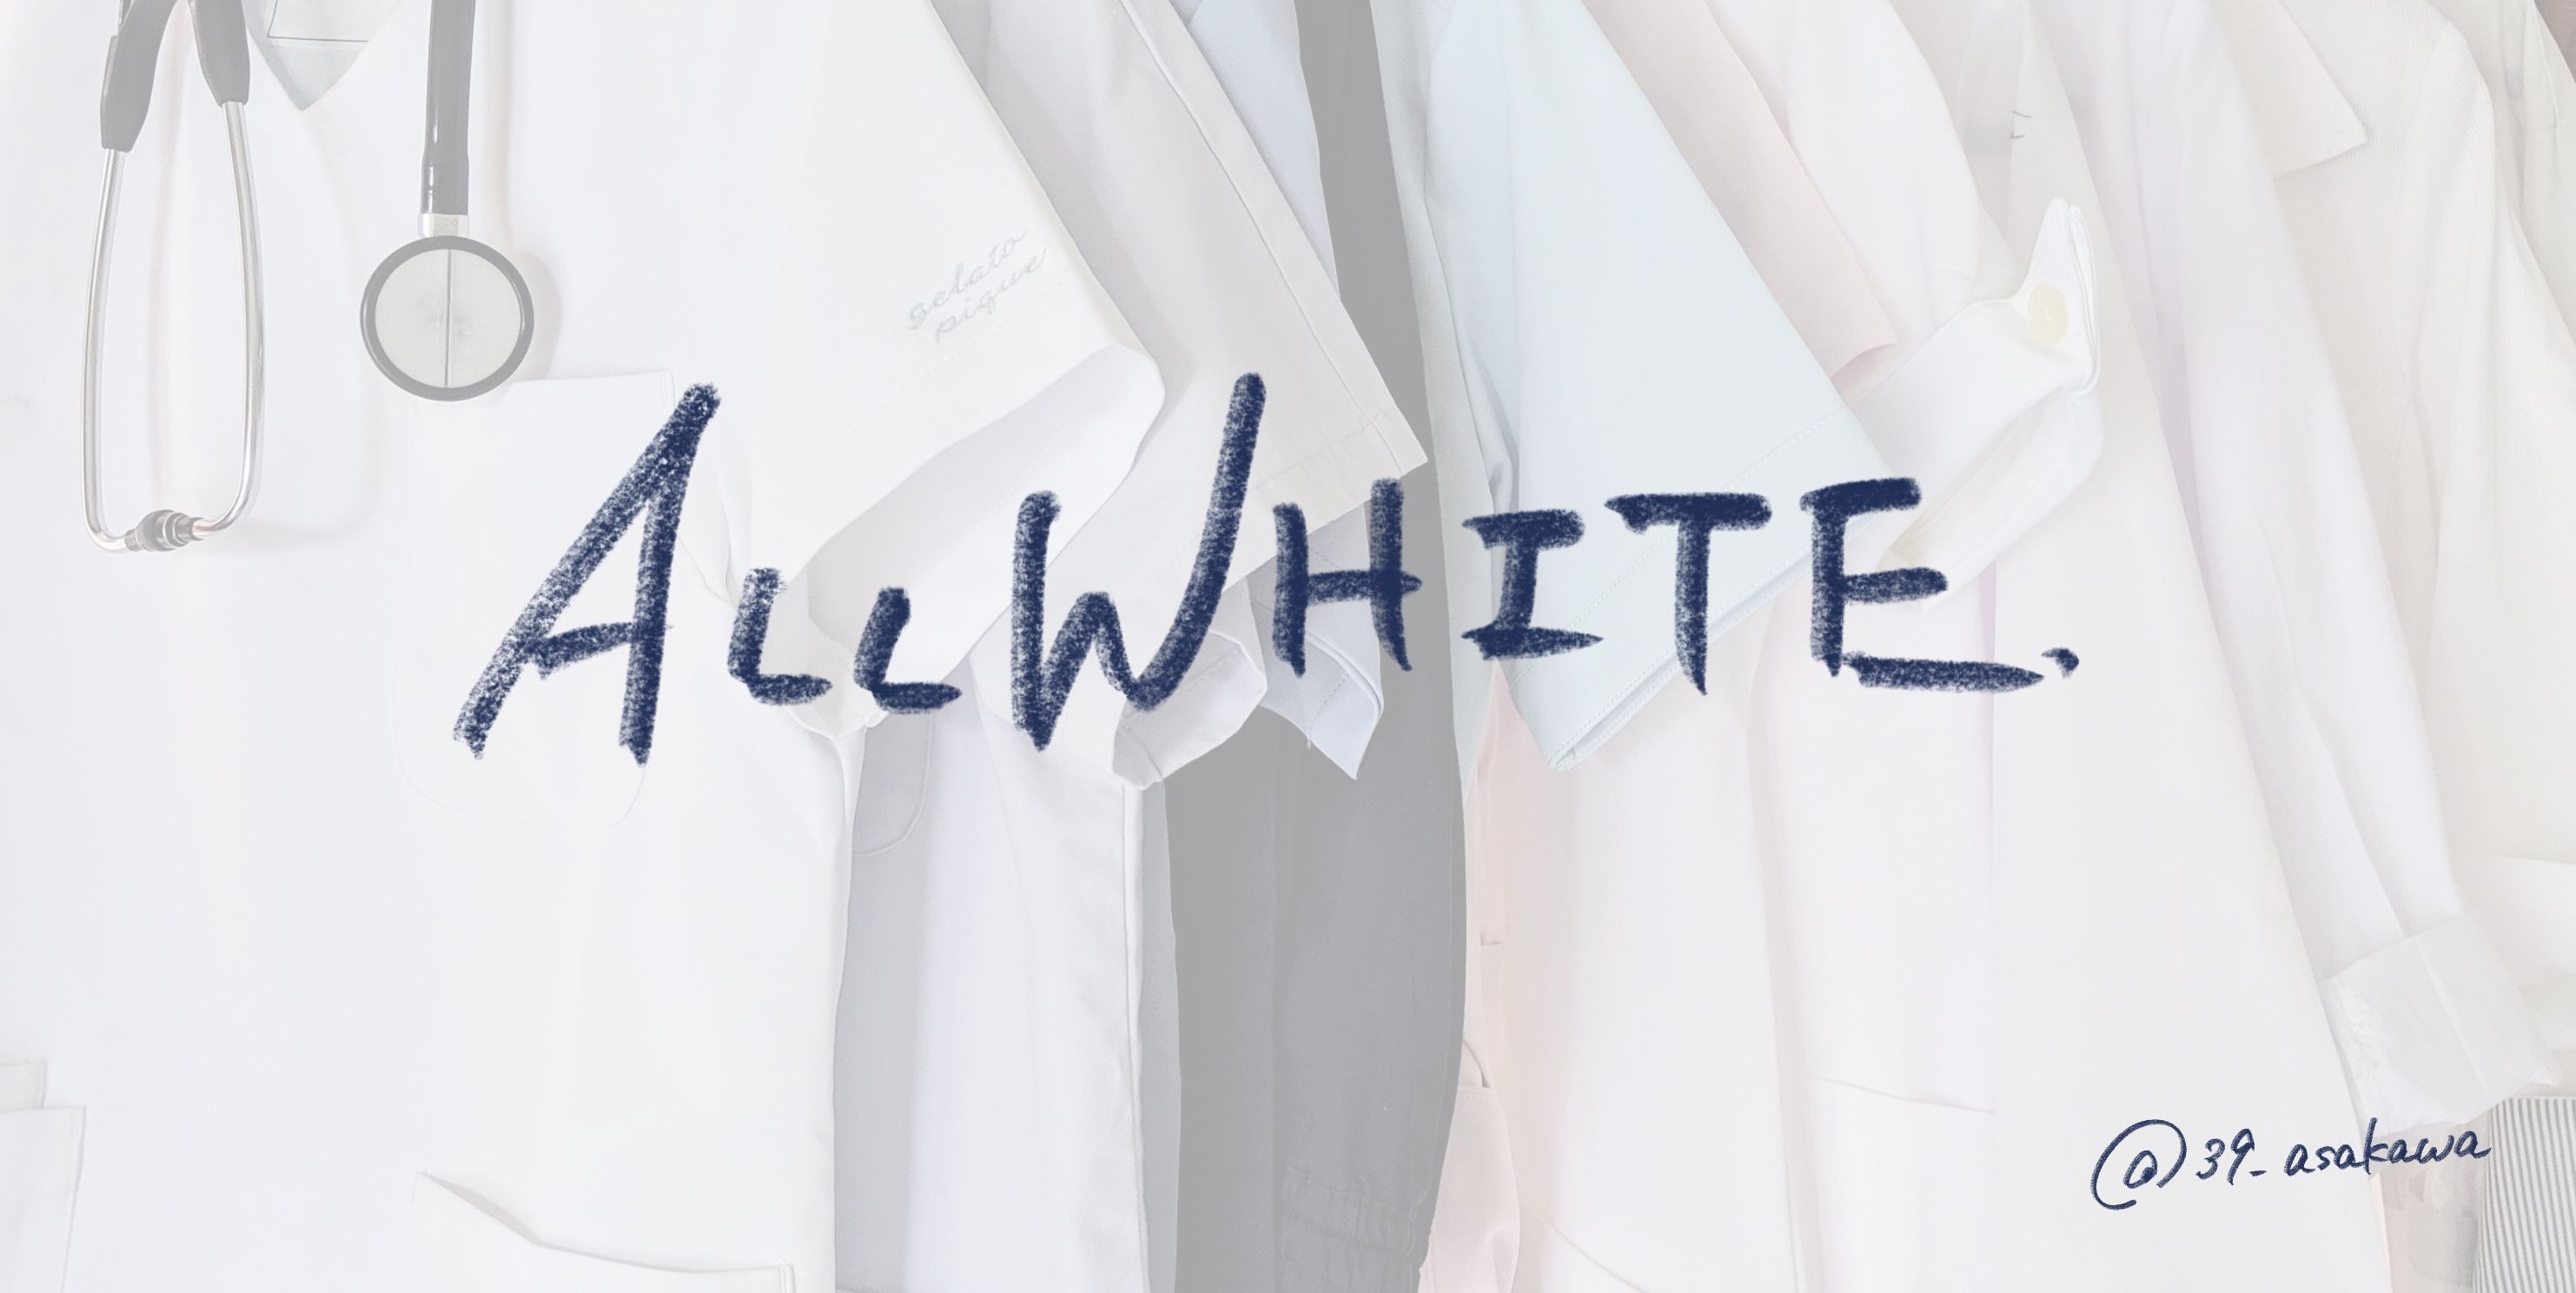 ALL WHITE